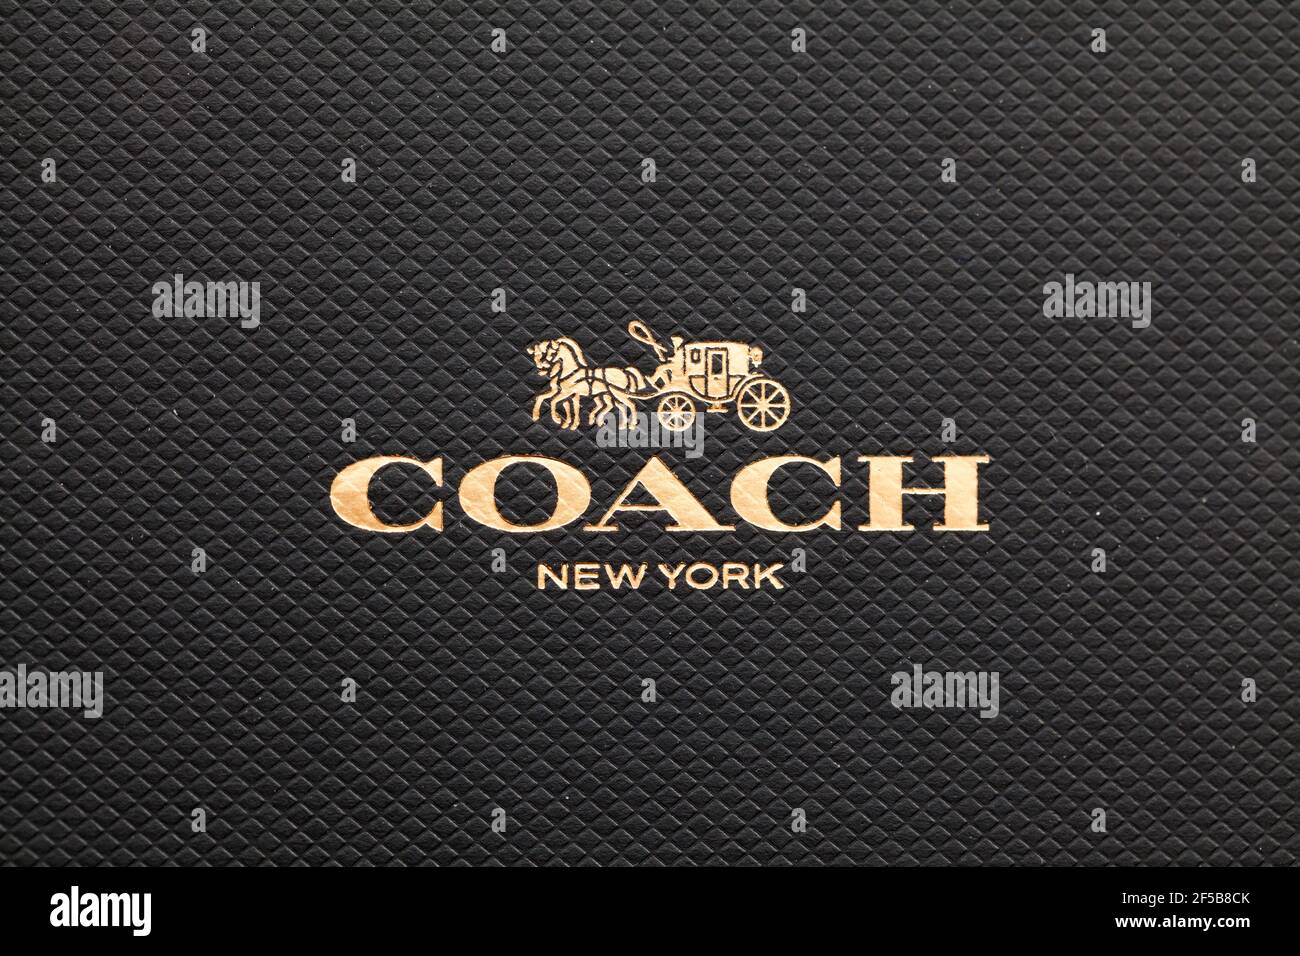 Coach logo on box Stock Photo